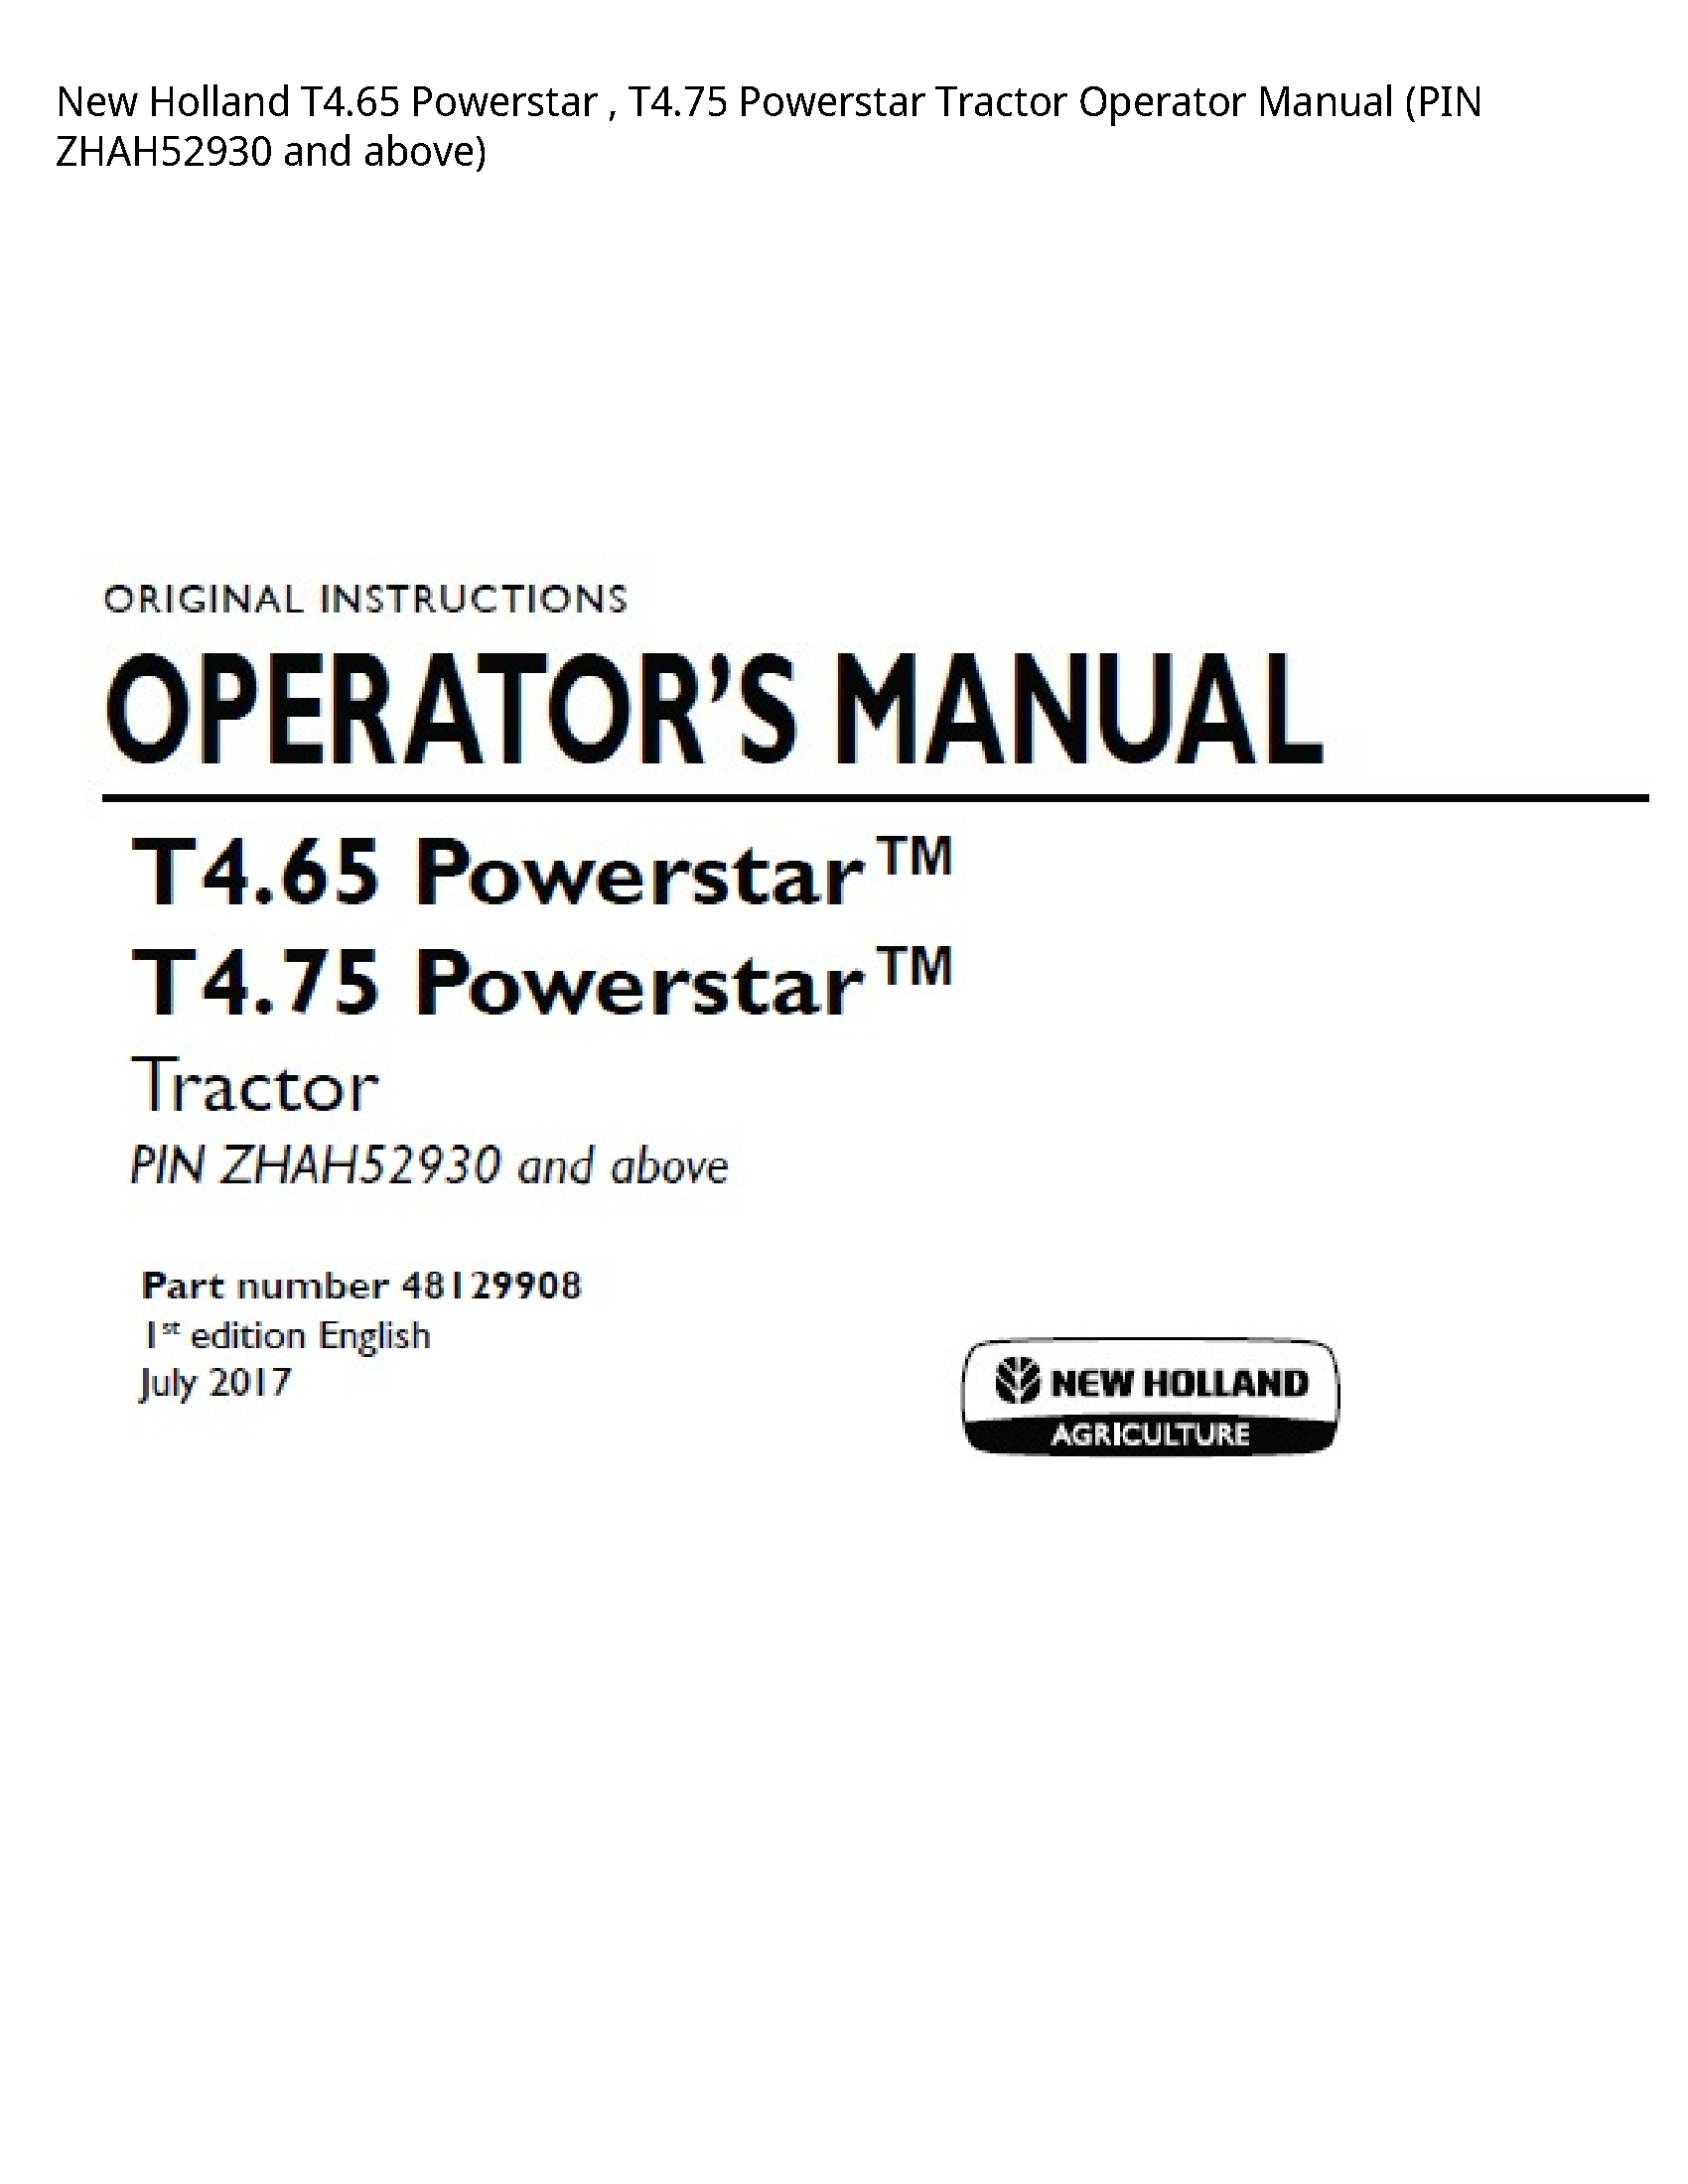 New Holland T4.65 Powerstar Powerstar Tractor Operator manual